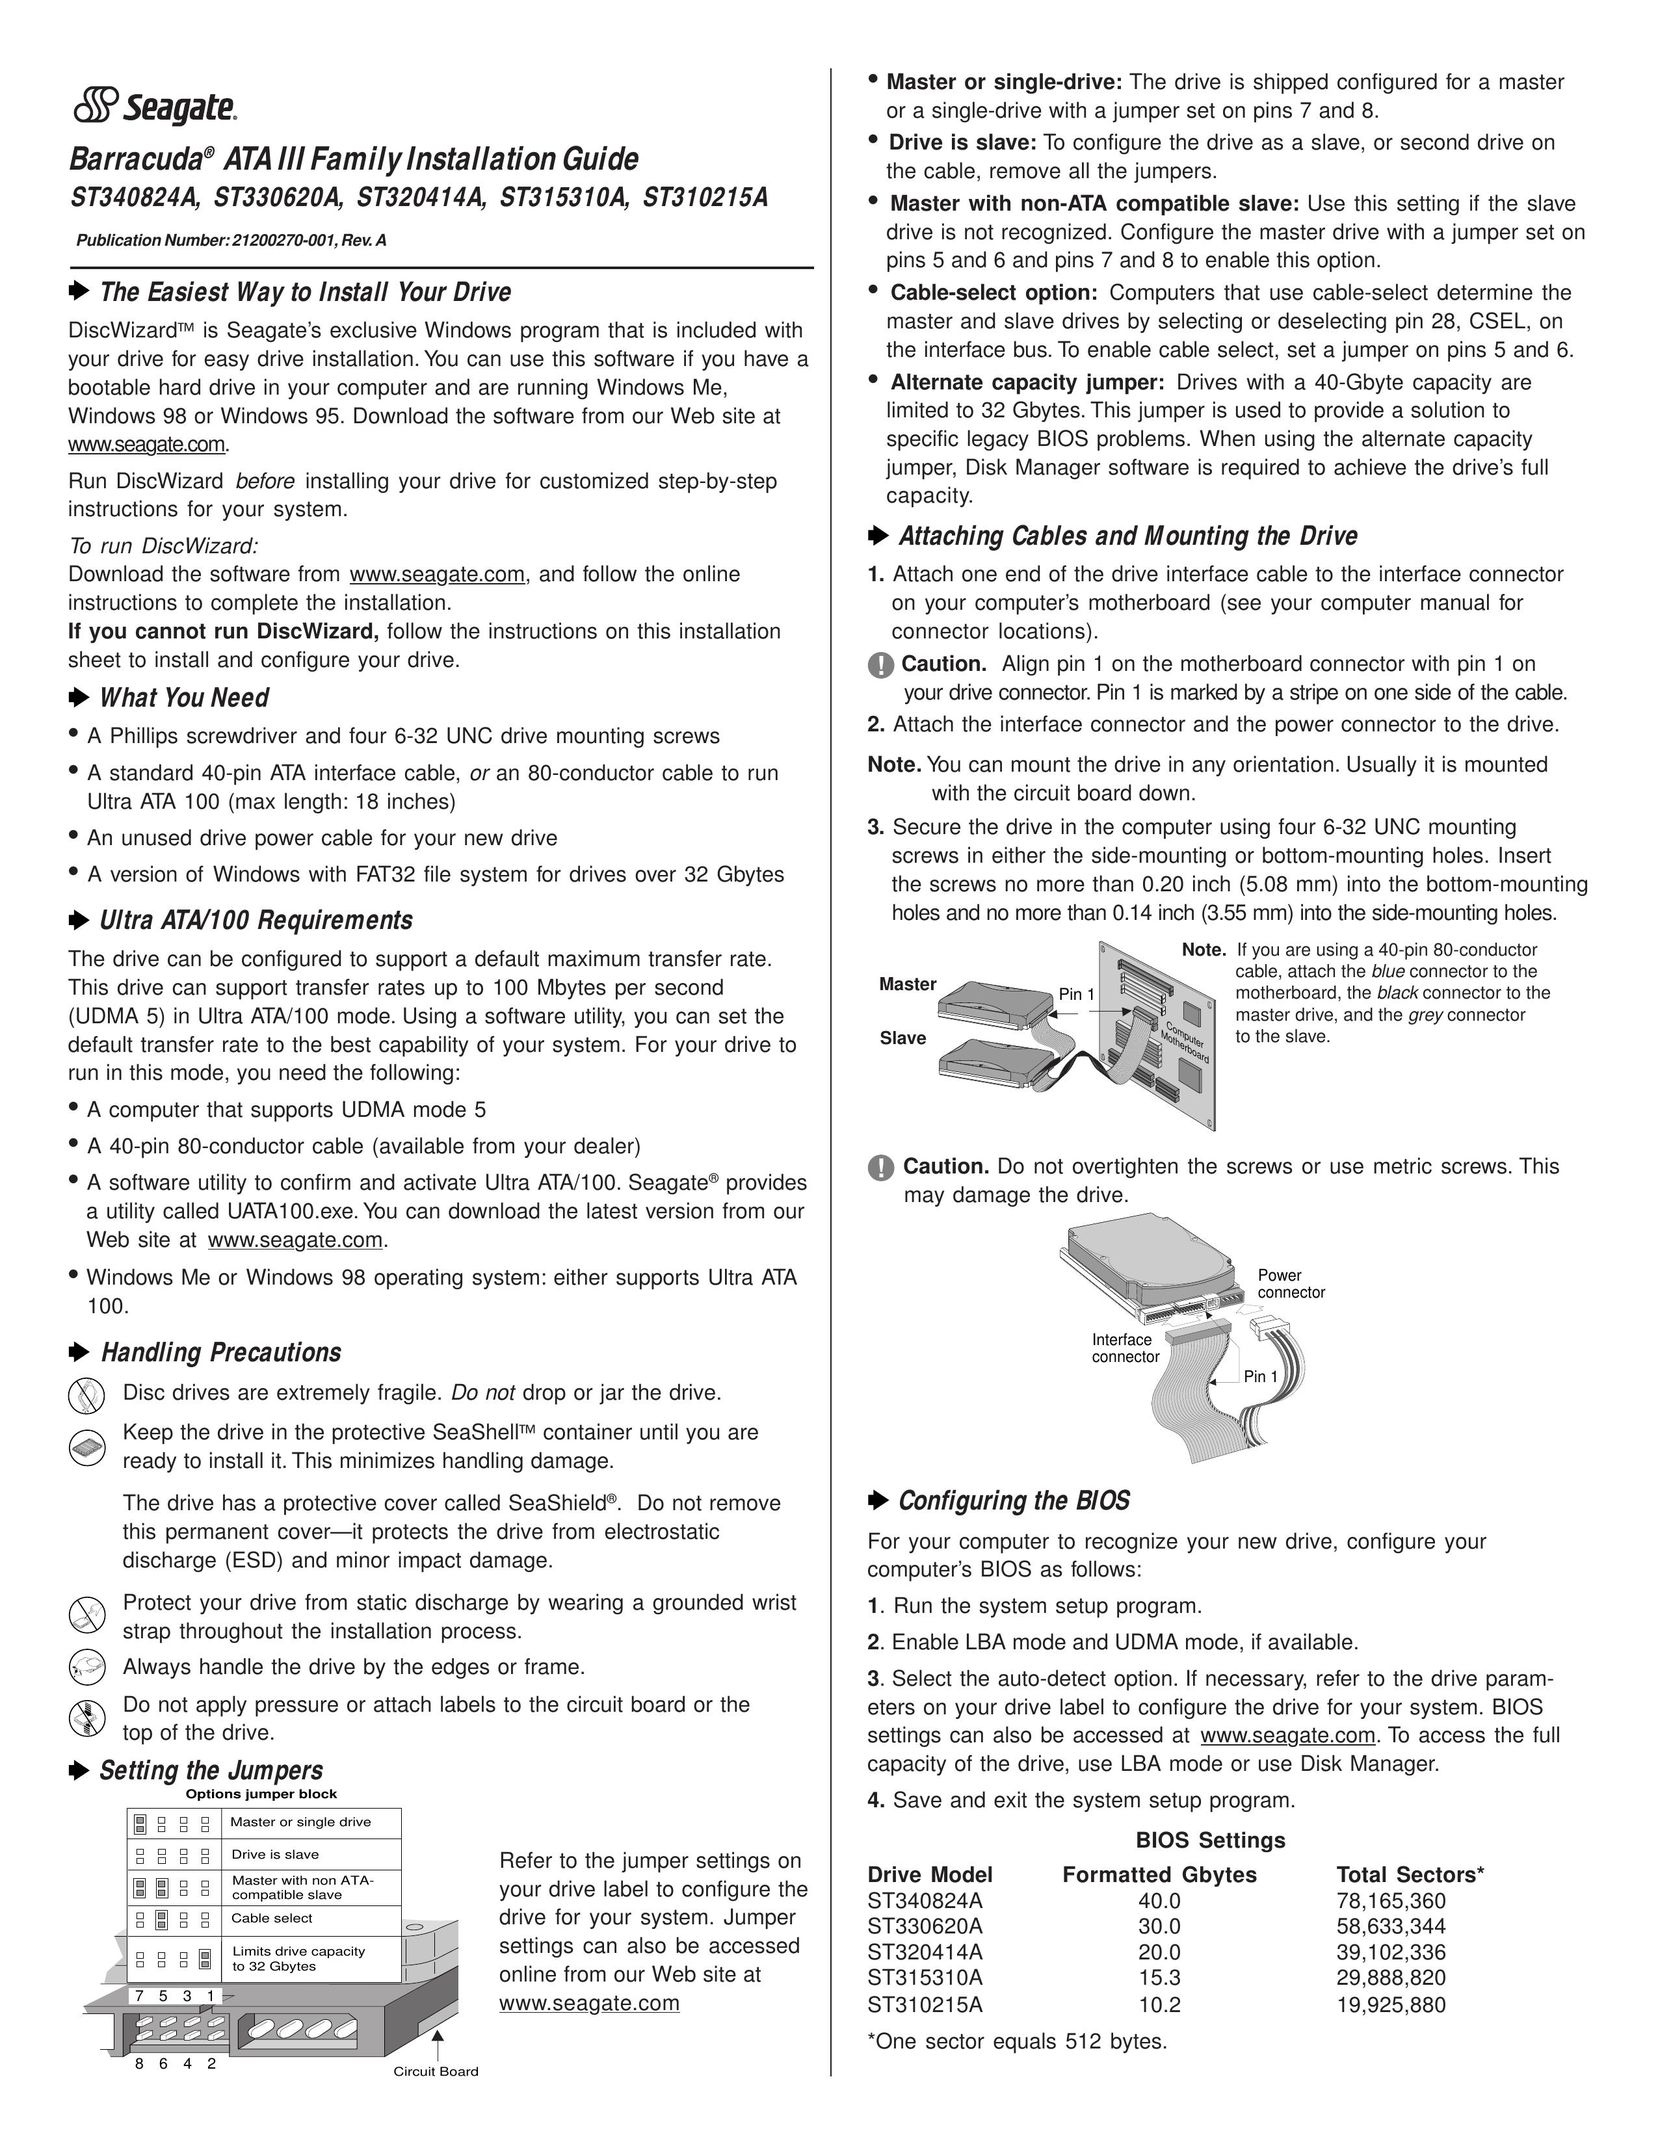 Barracuda Networks ST330620A Computer Drive User Manual